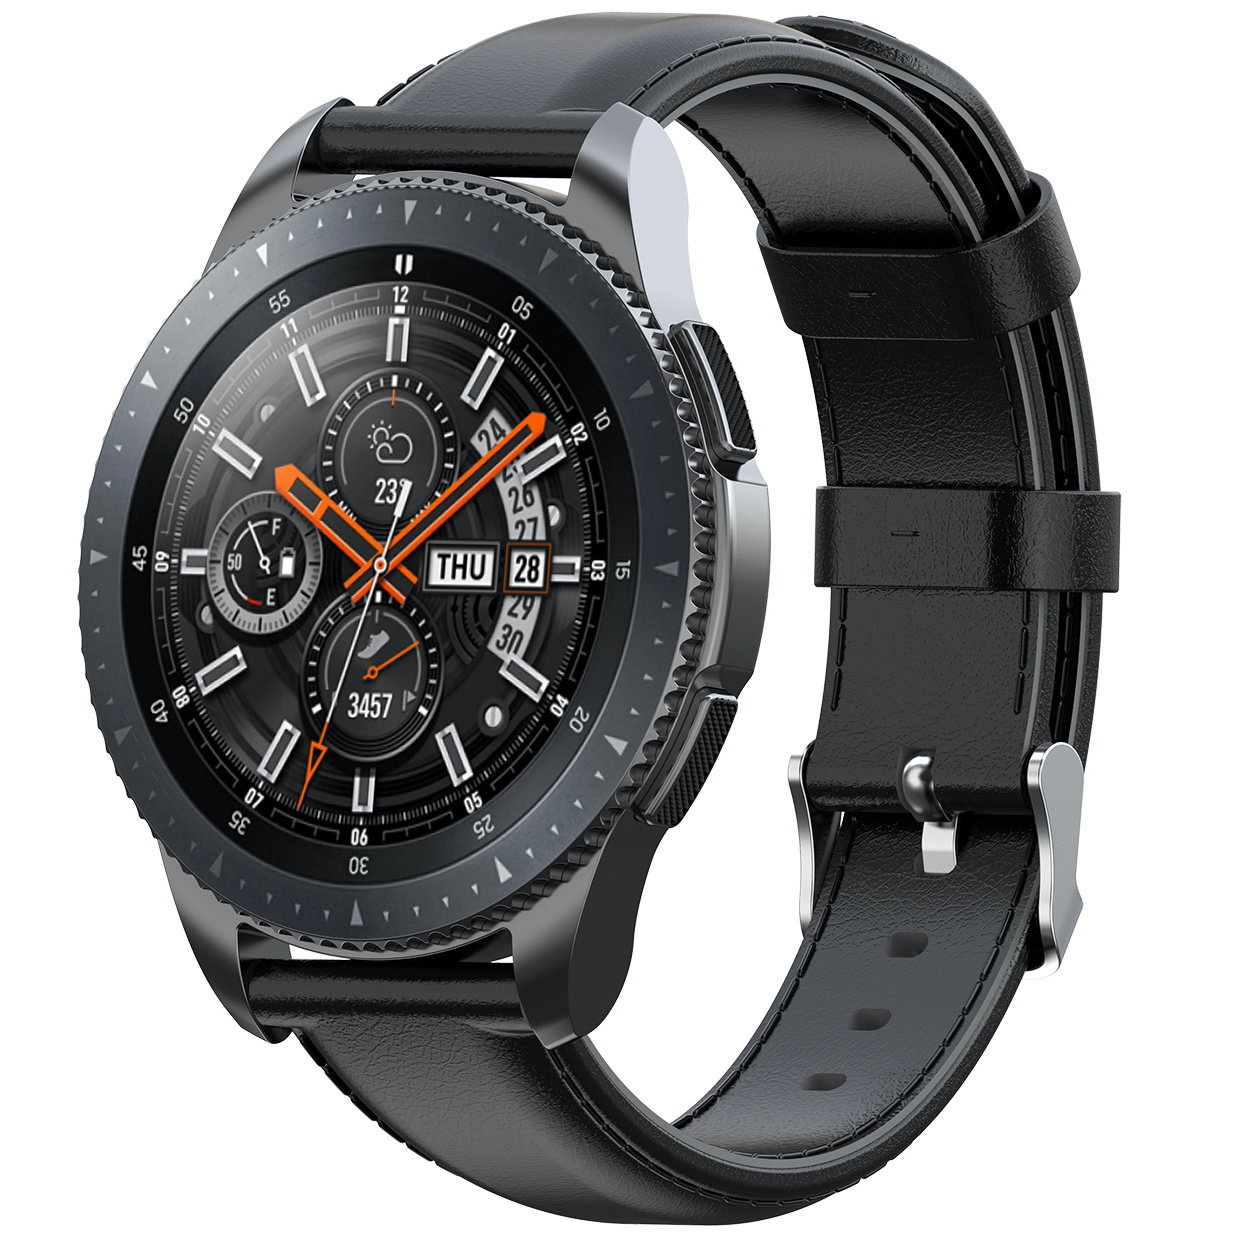 Cinturino in pelle per Huawei Watch GT - nero